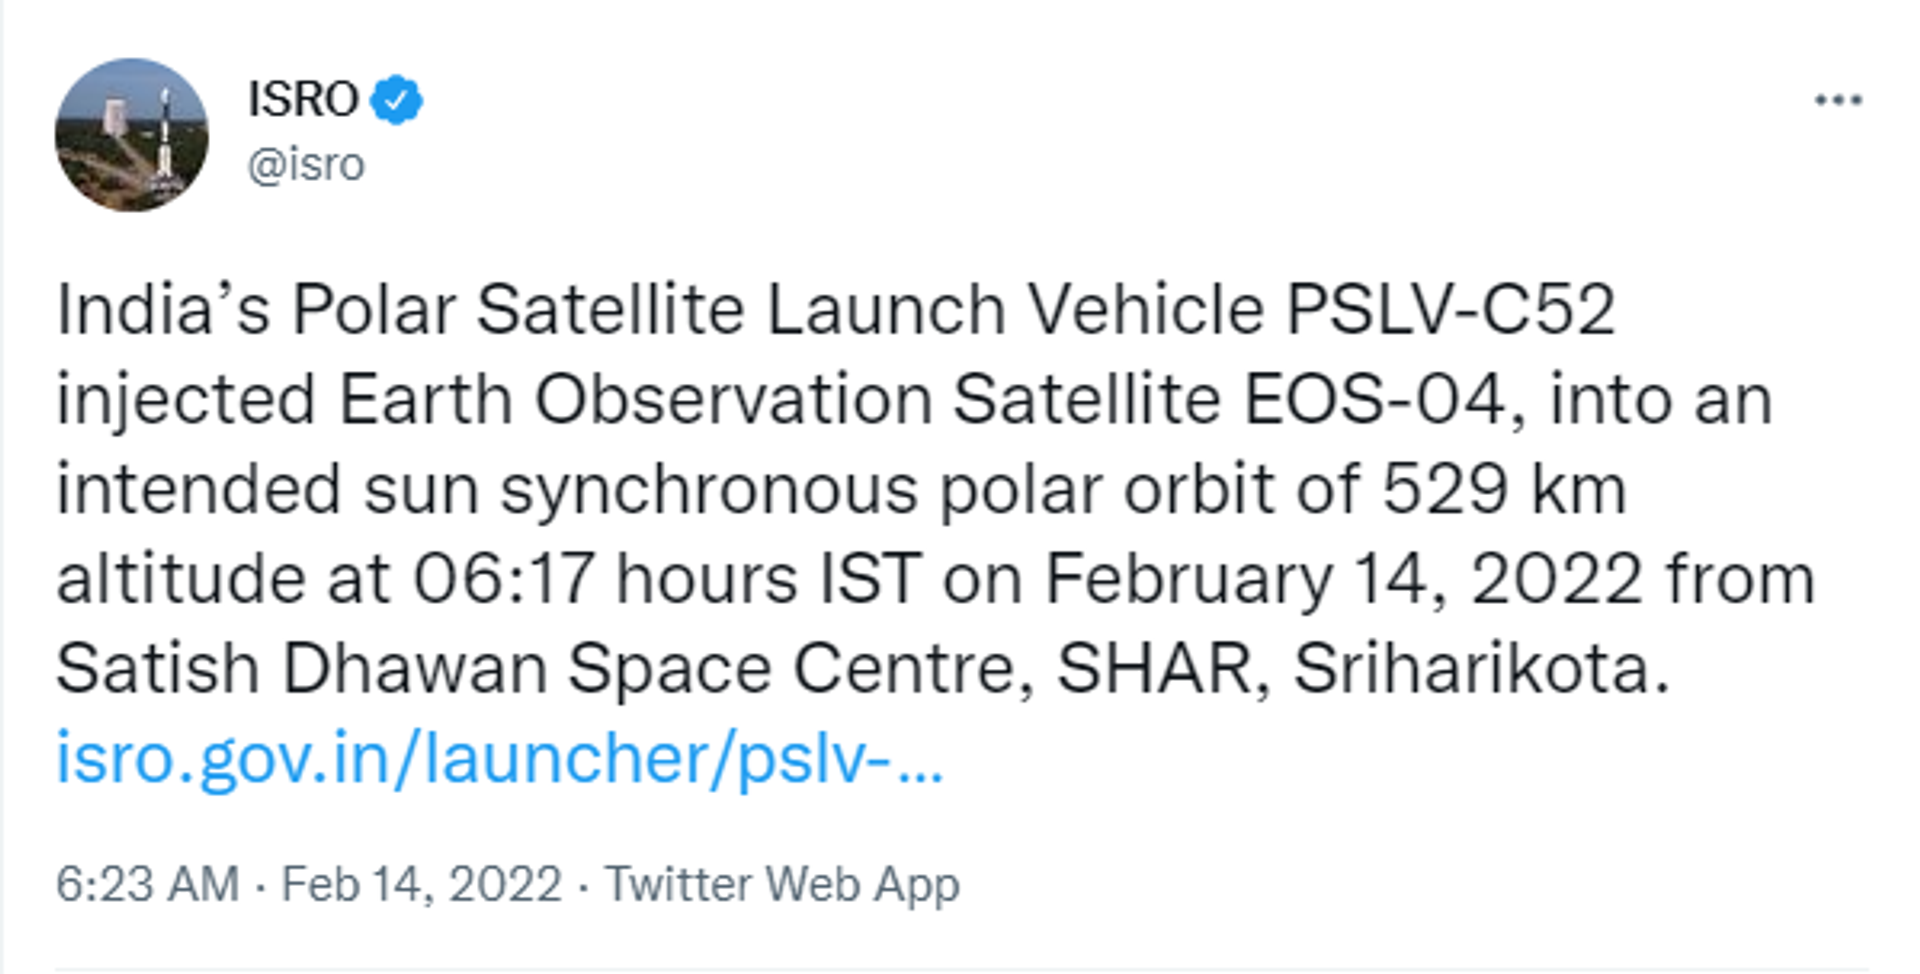 ISRO Confirms Launch of Polar Satellite Launch Vehicle PSLV-C52 - Sputnik International, 1920, 14.02.2022